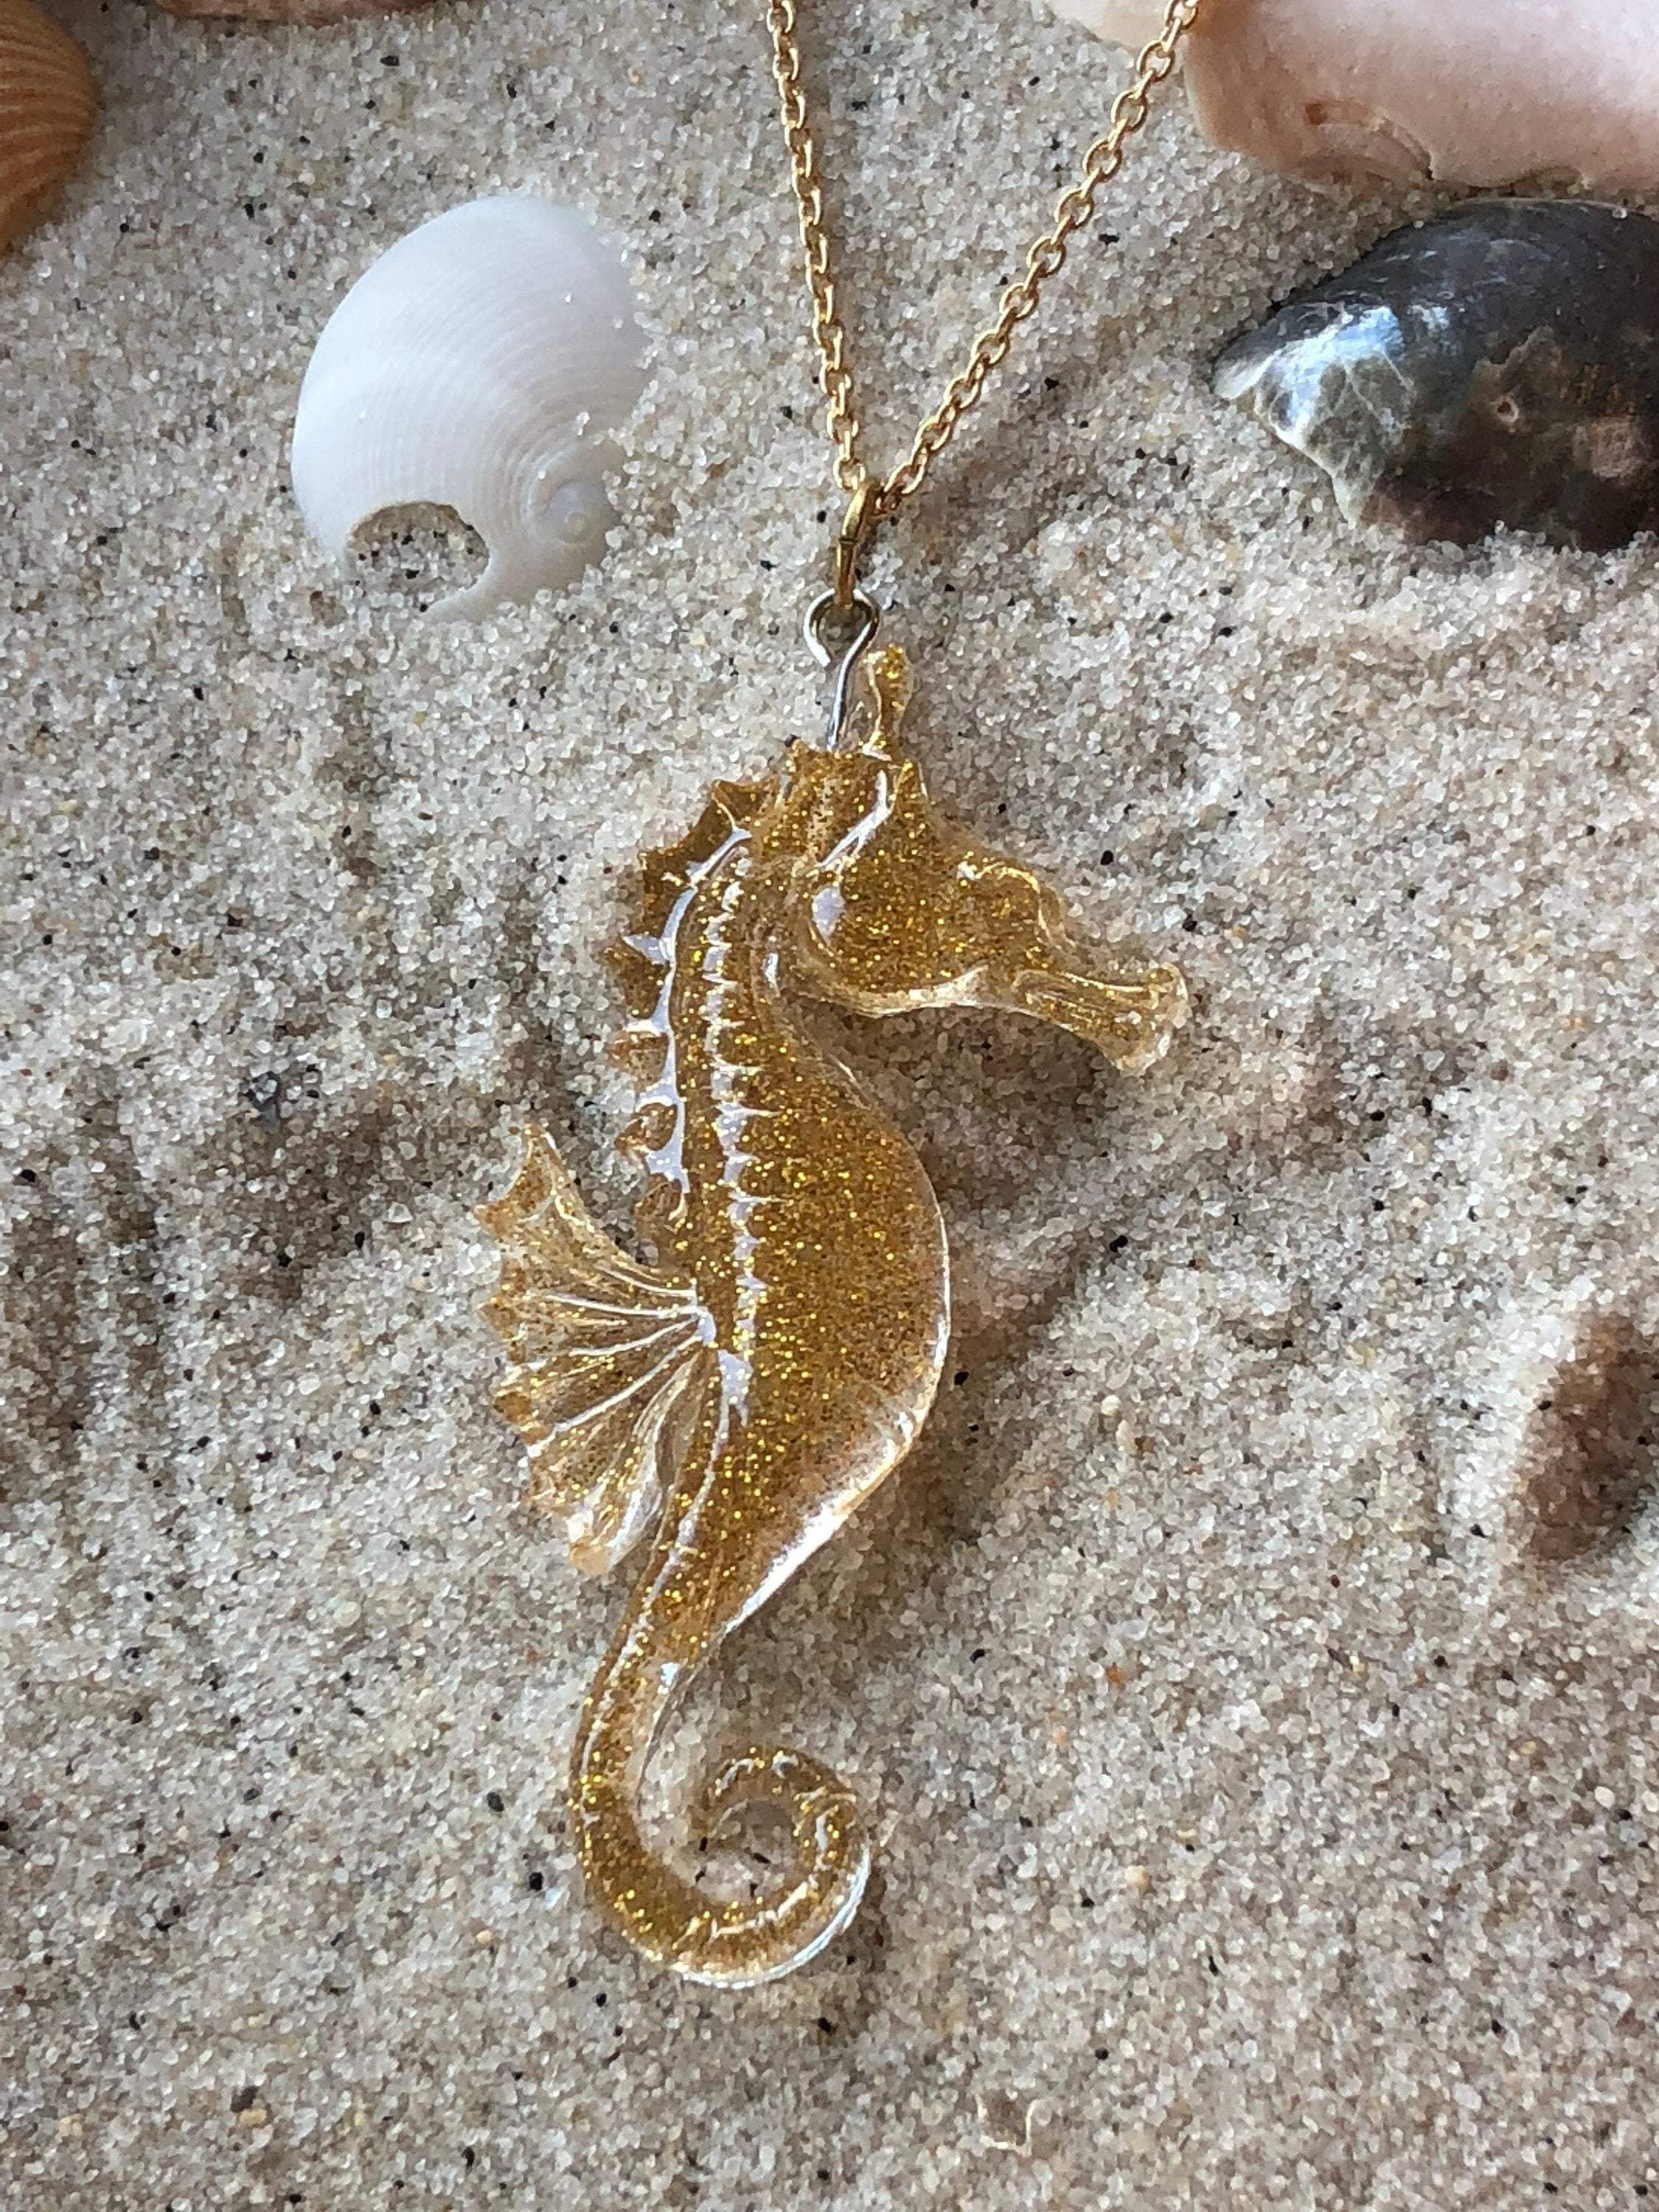 Seahorse Ankle Bracelet Chain Goldtone 11 Inch